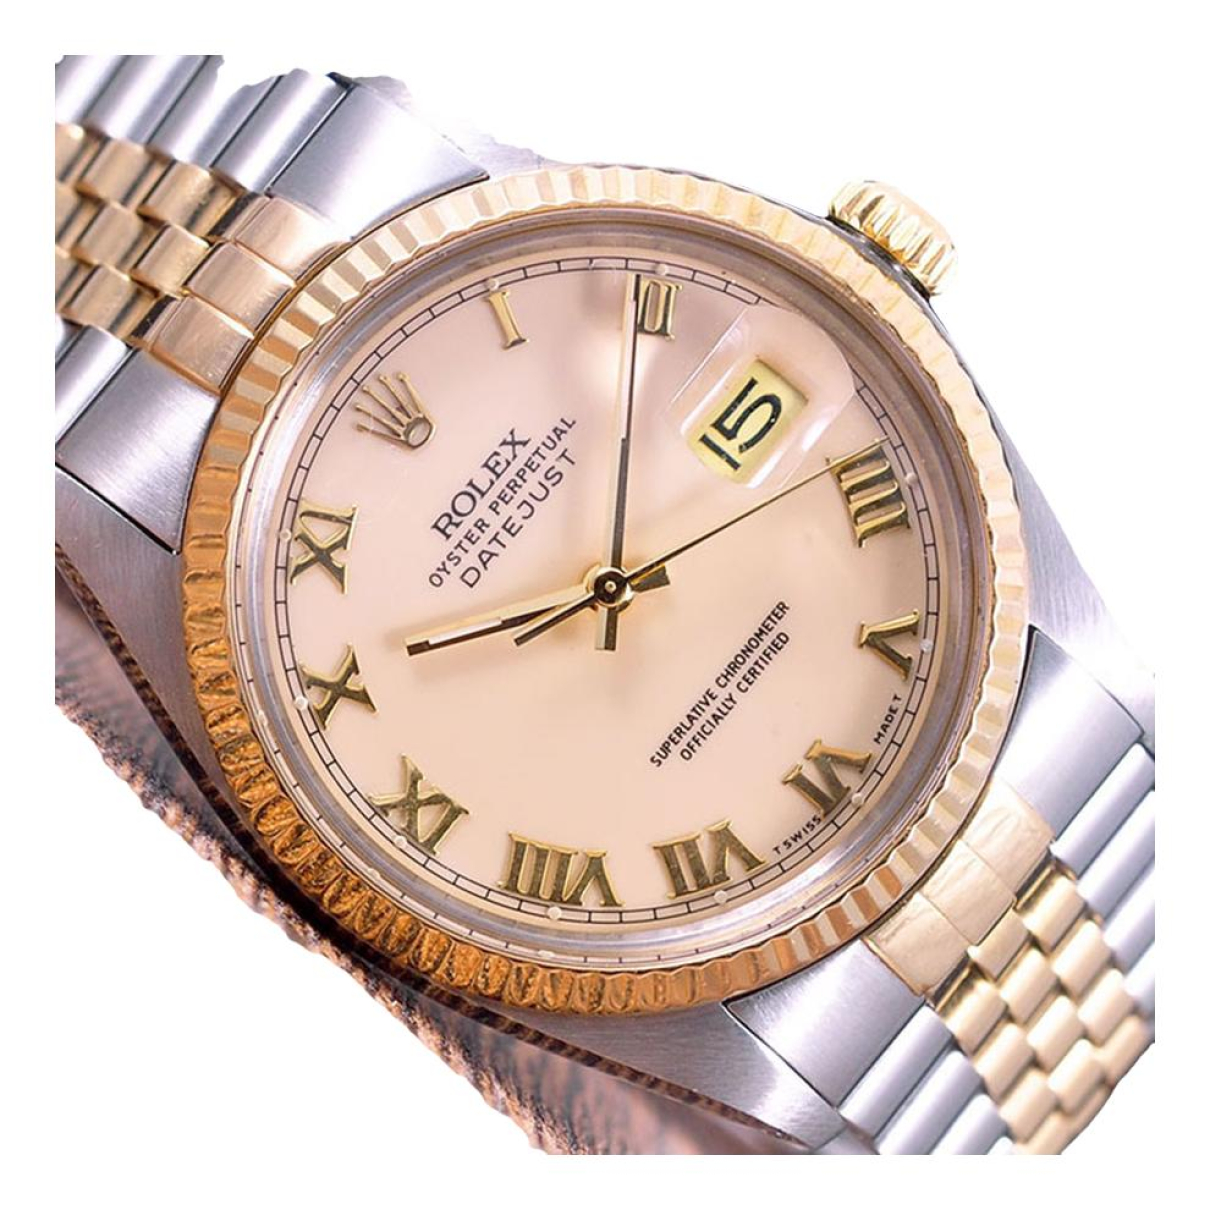 image of Rolex Datejust 36mm watch